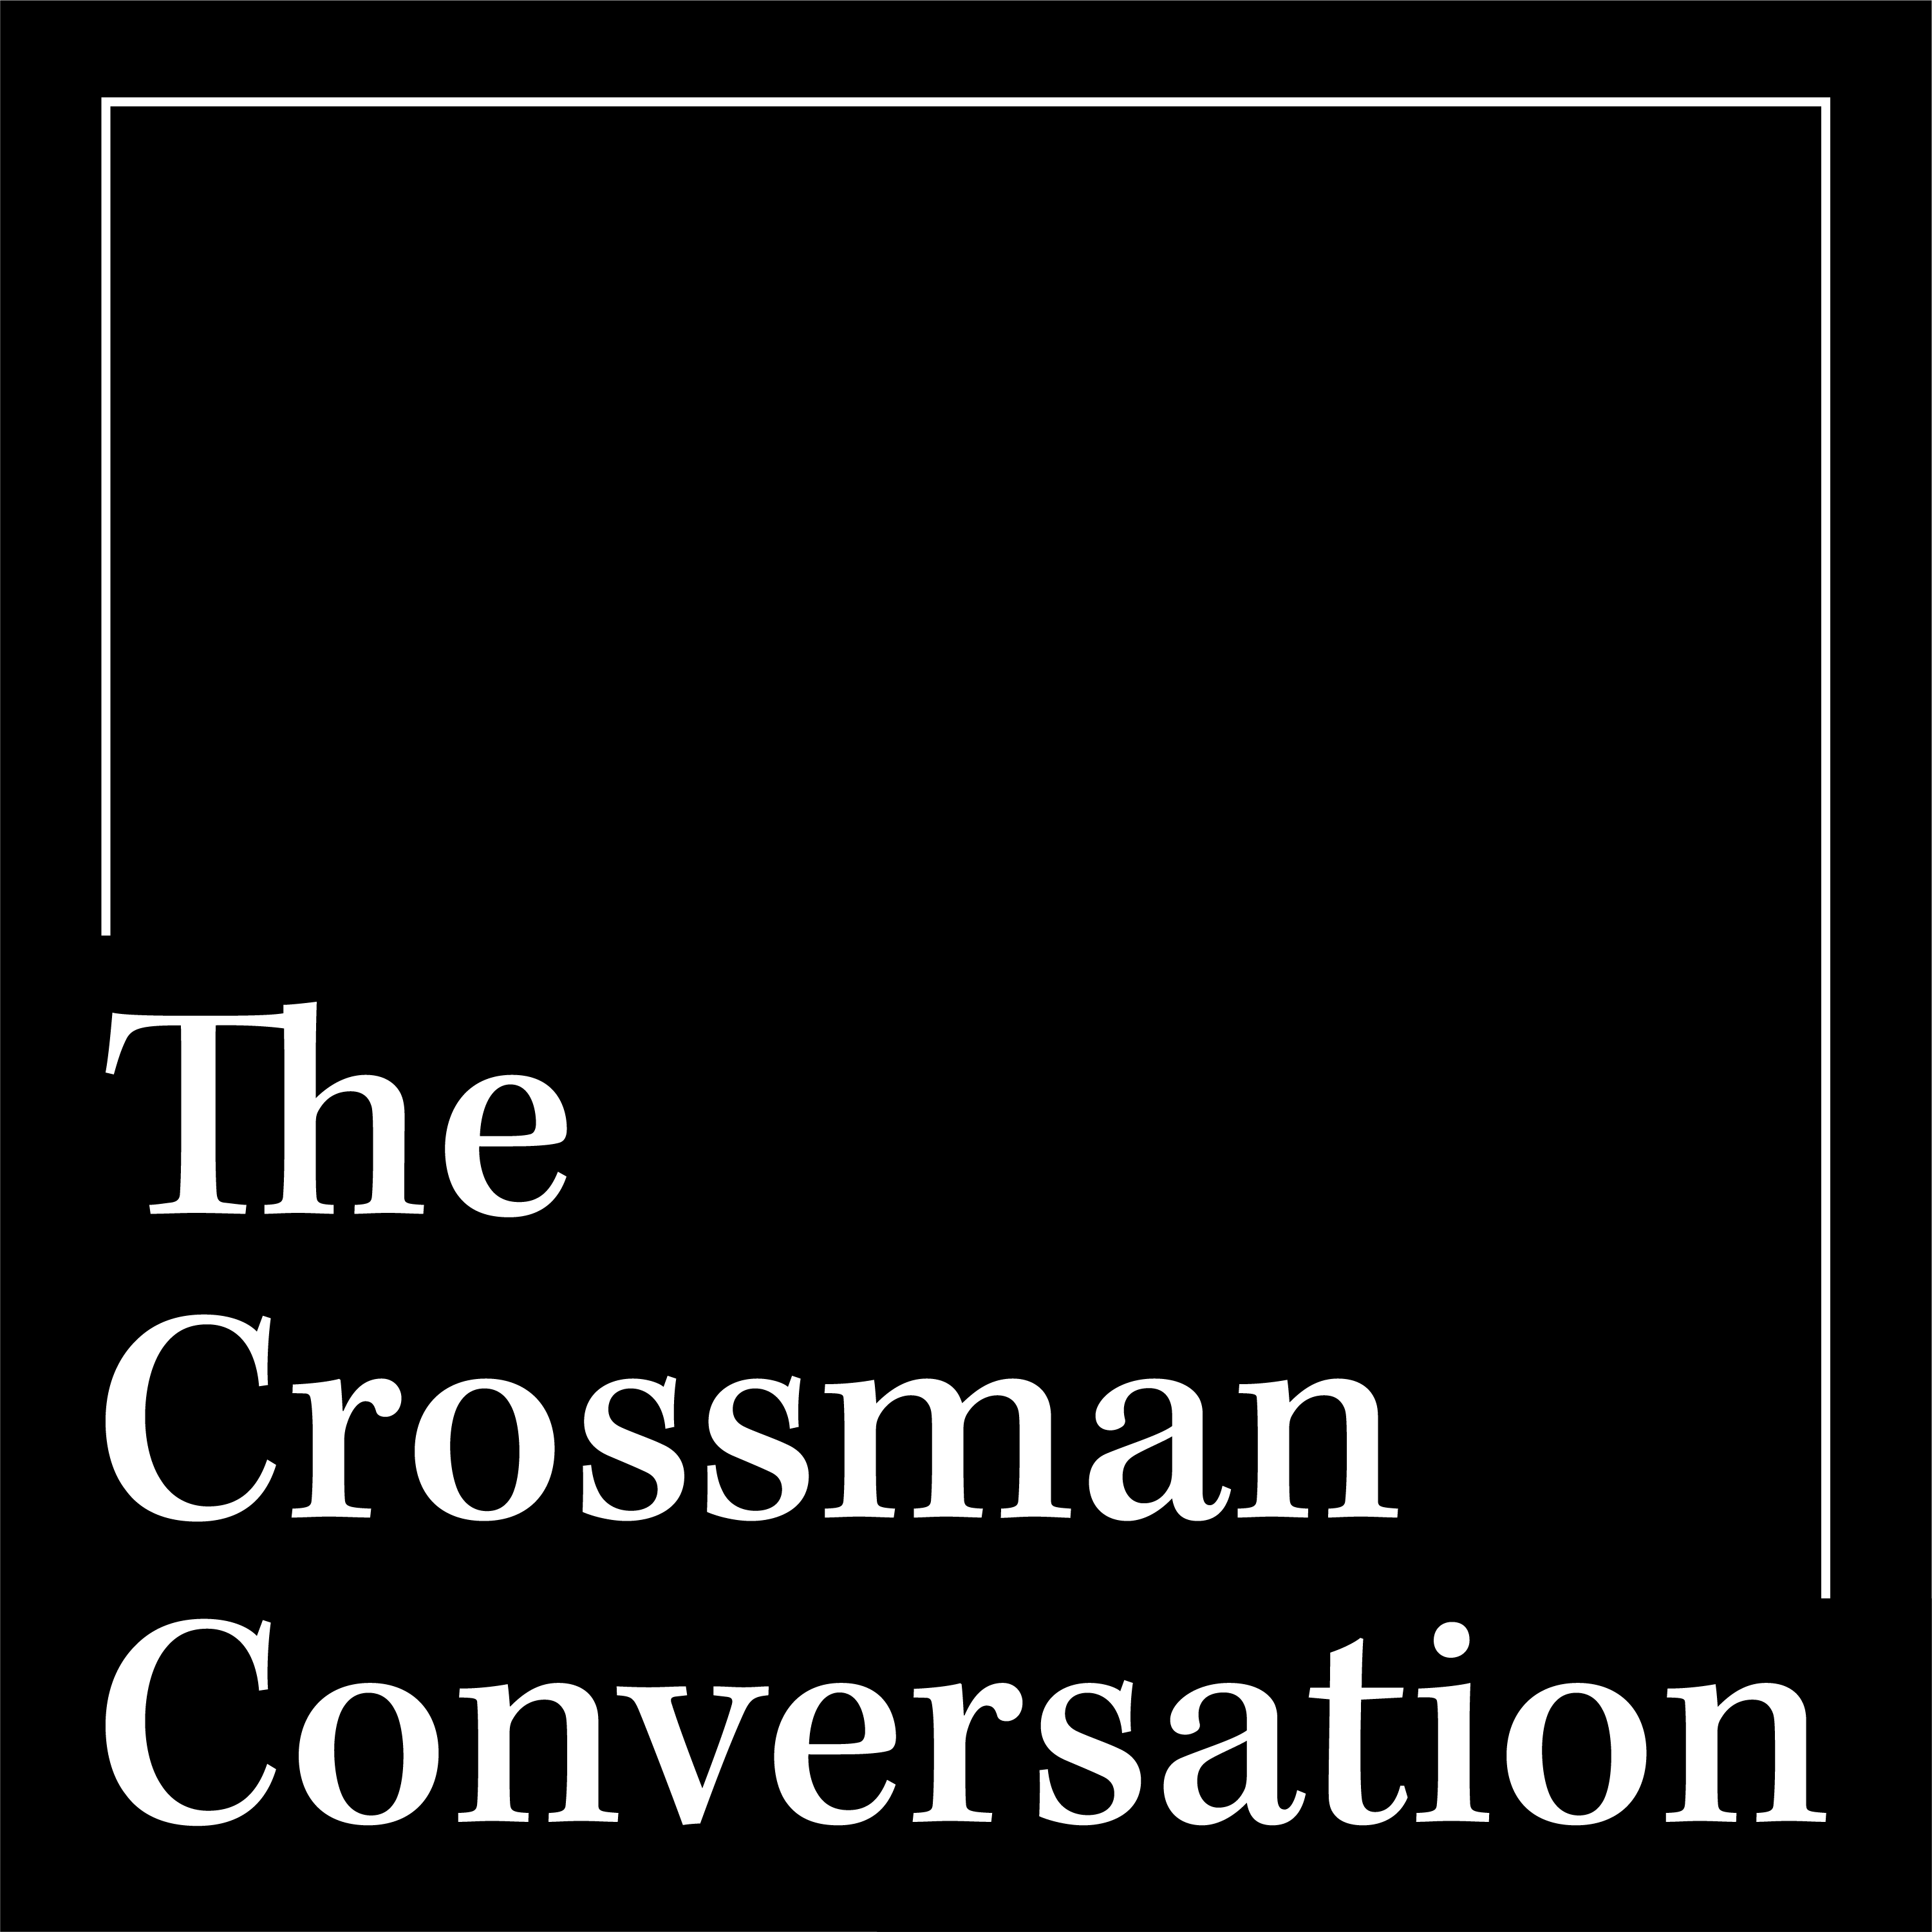 The Crossman Conversation